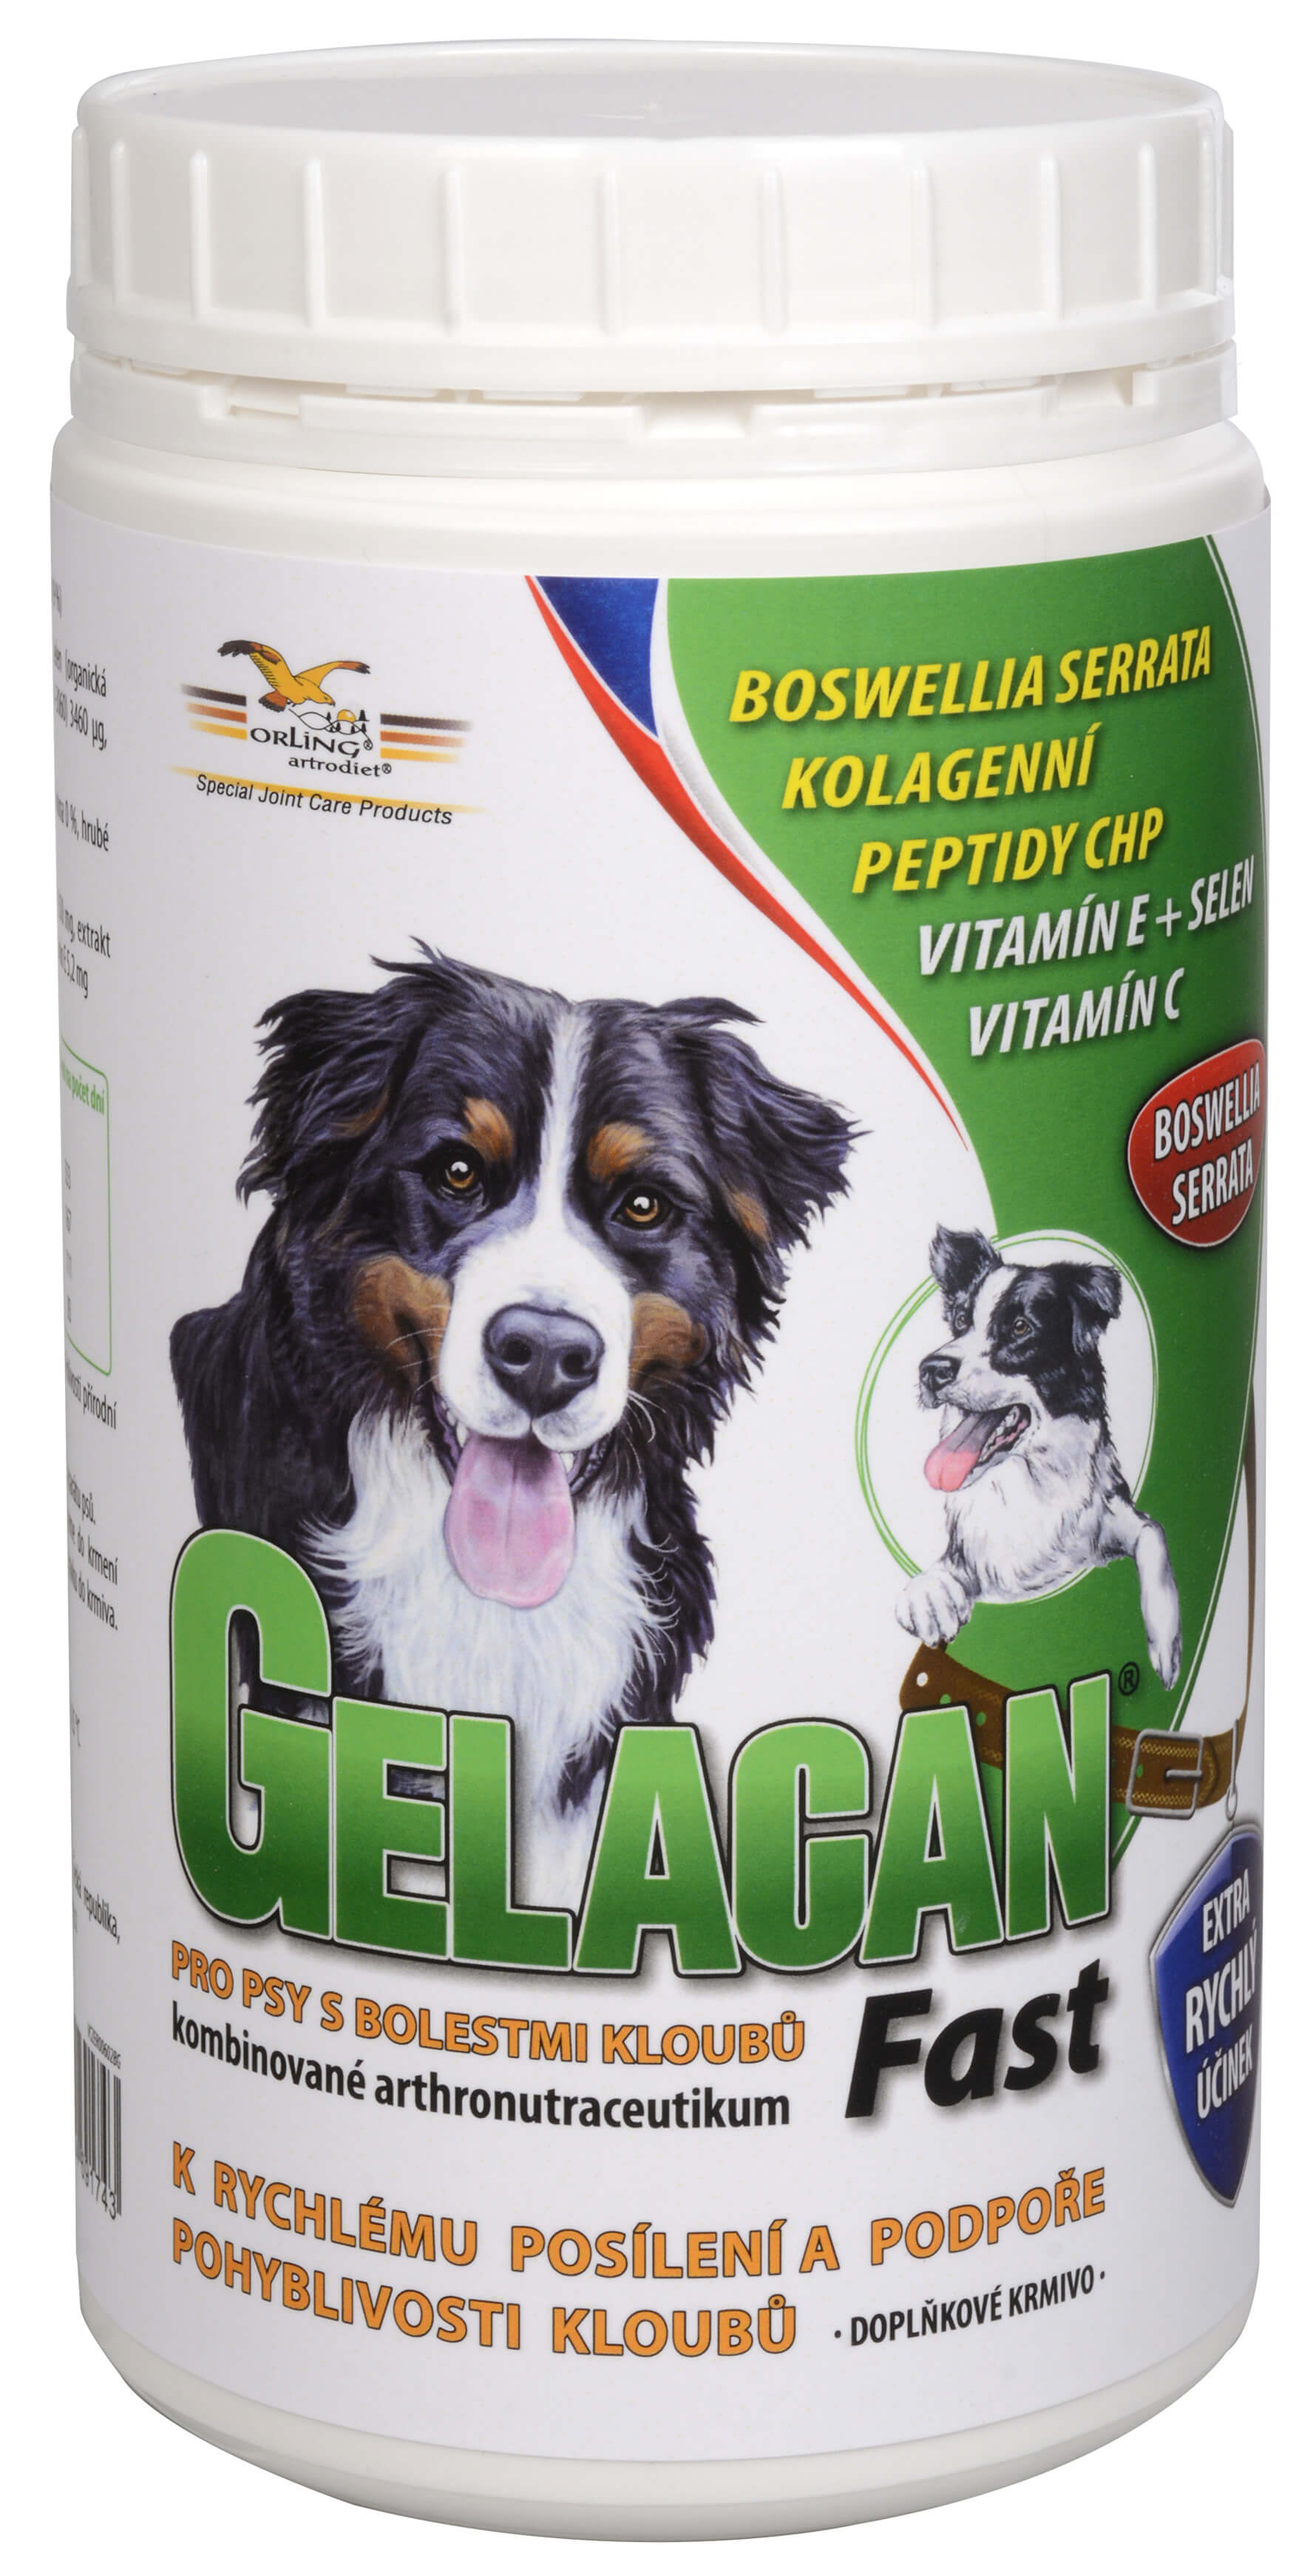 Zobrazit detail výrobku GELACAN Gelacan Fast 500 g